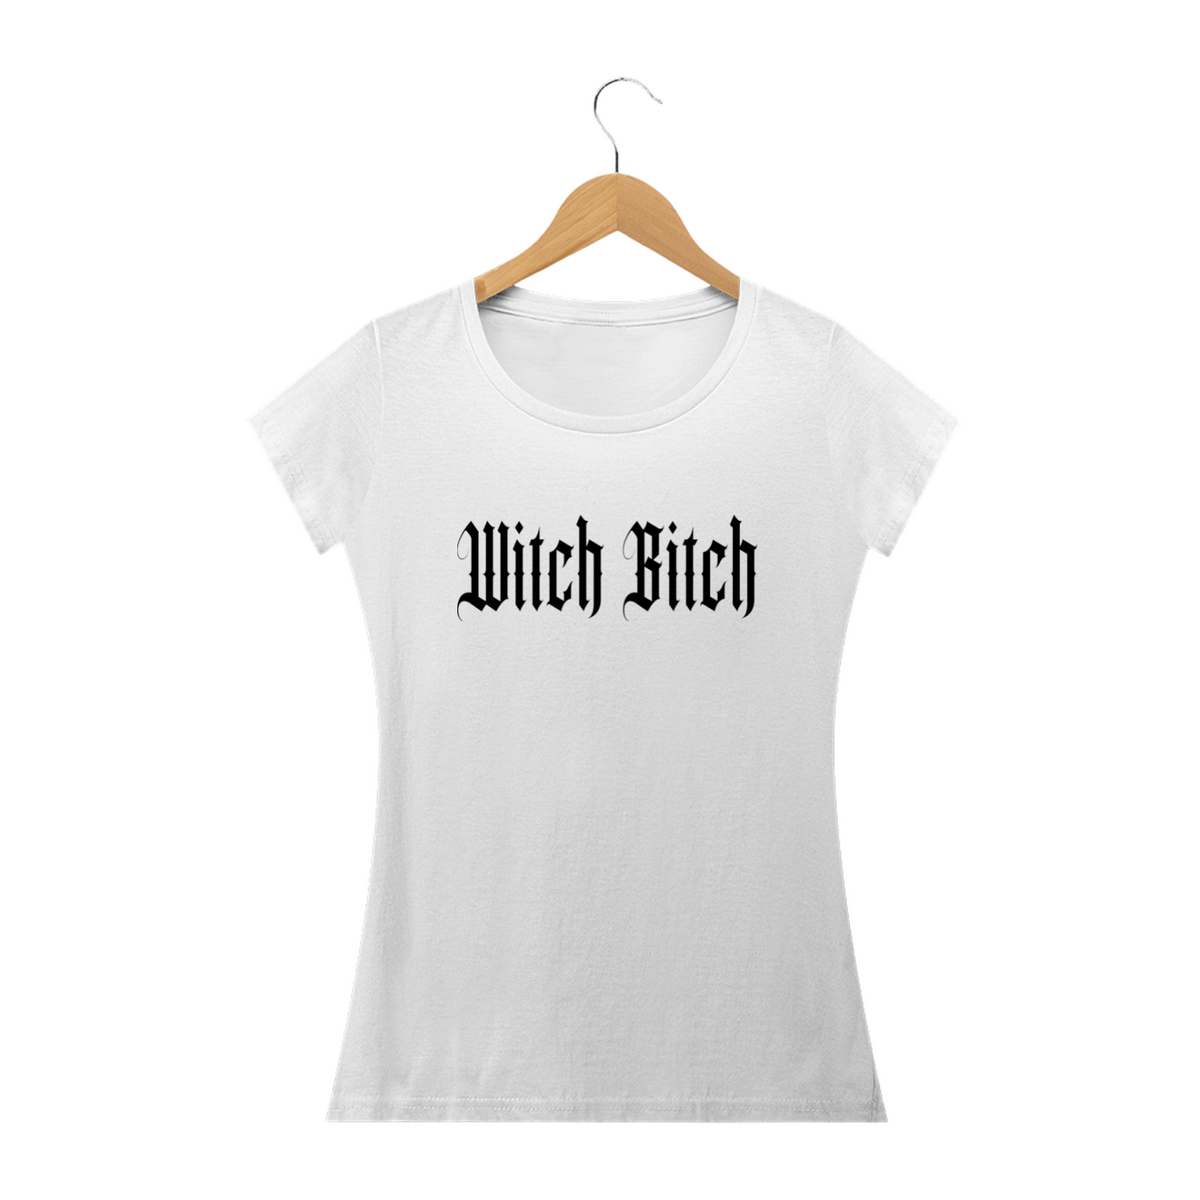 Nome do produto: Witch Bitch Babylook branca